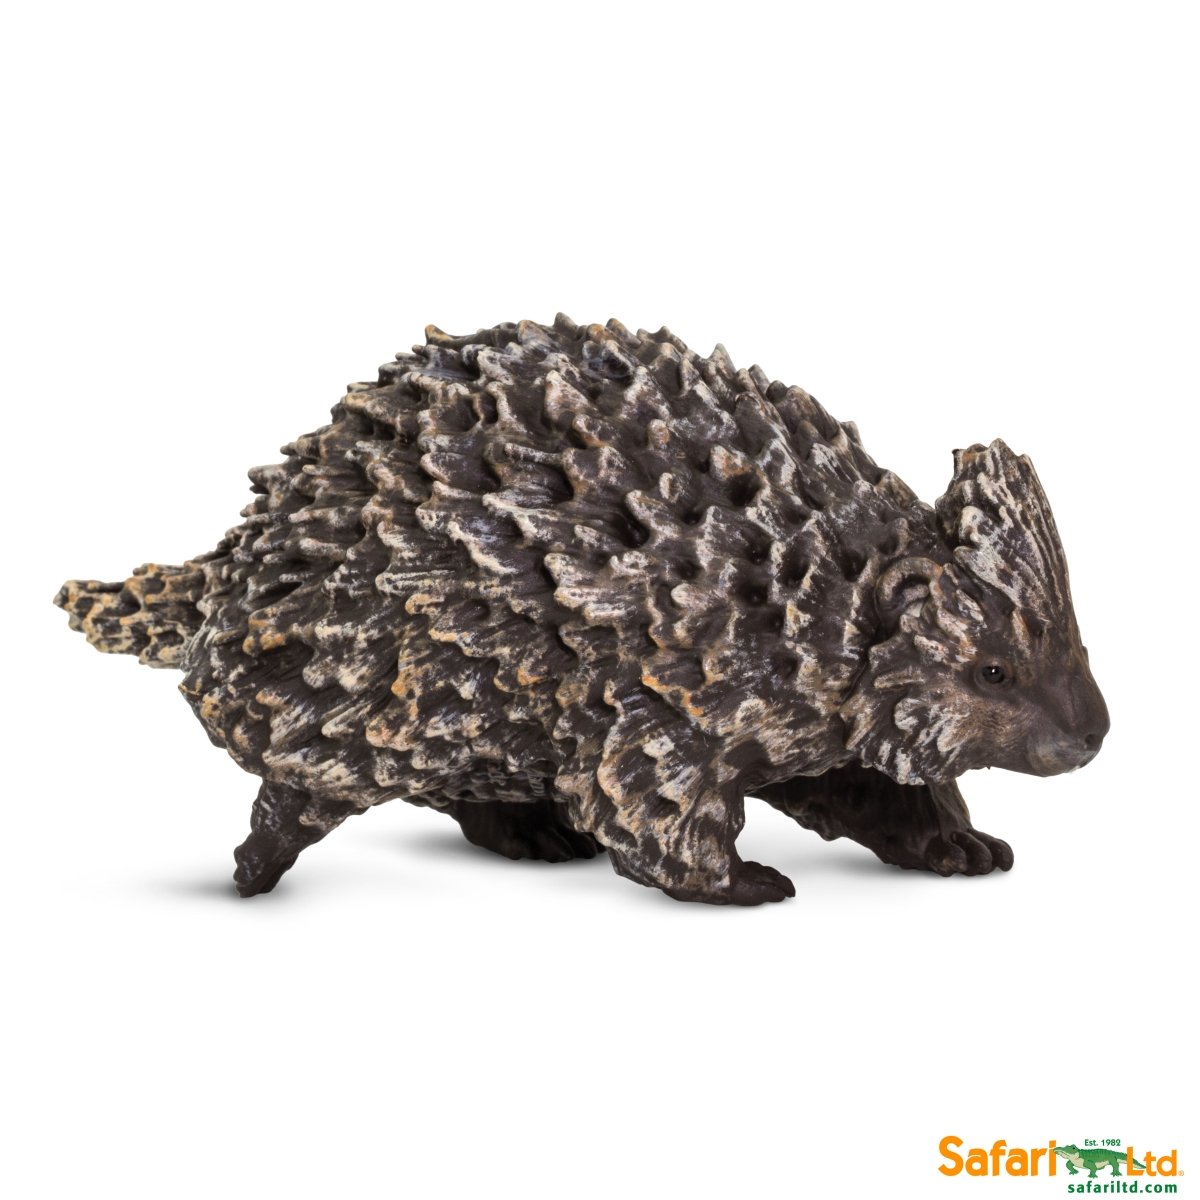 Picture of Safari 229329 Porcupine Figurine, Multi Color